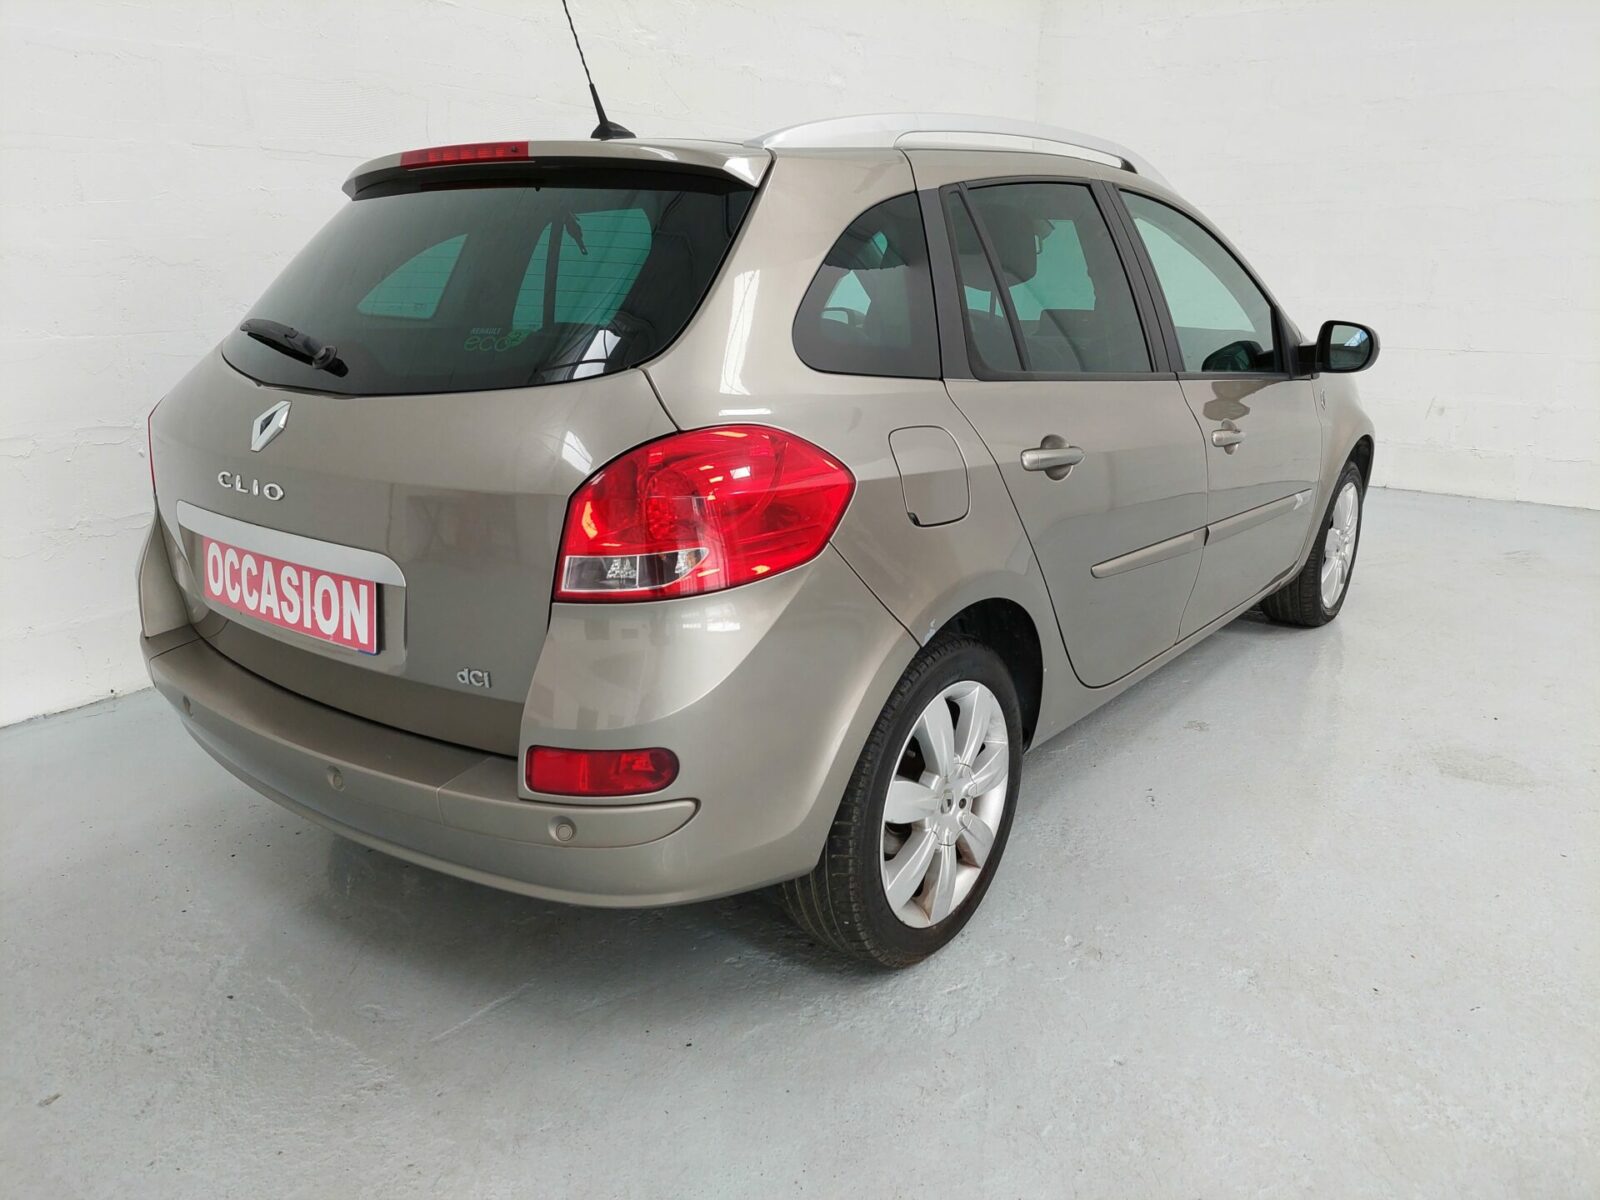 Acheter une Renault Clio iii d'occasion - AutoScout24